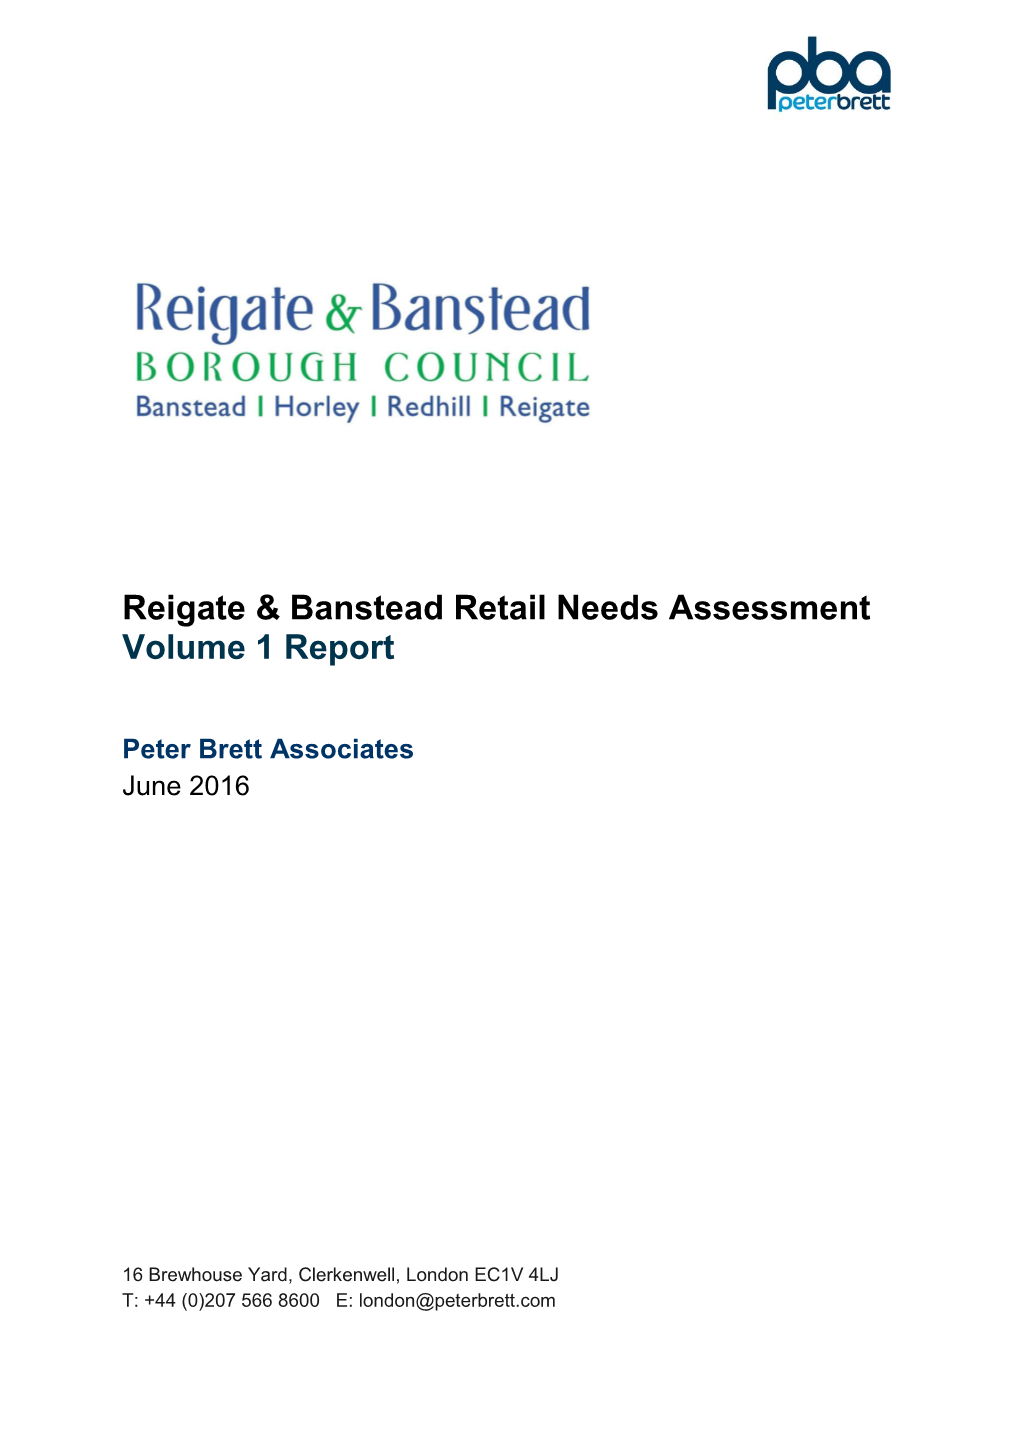 Reigate & Banstead Retail Needs Assessment Volume 1 Report